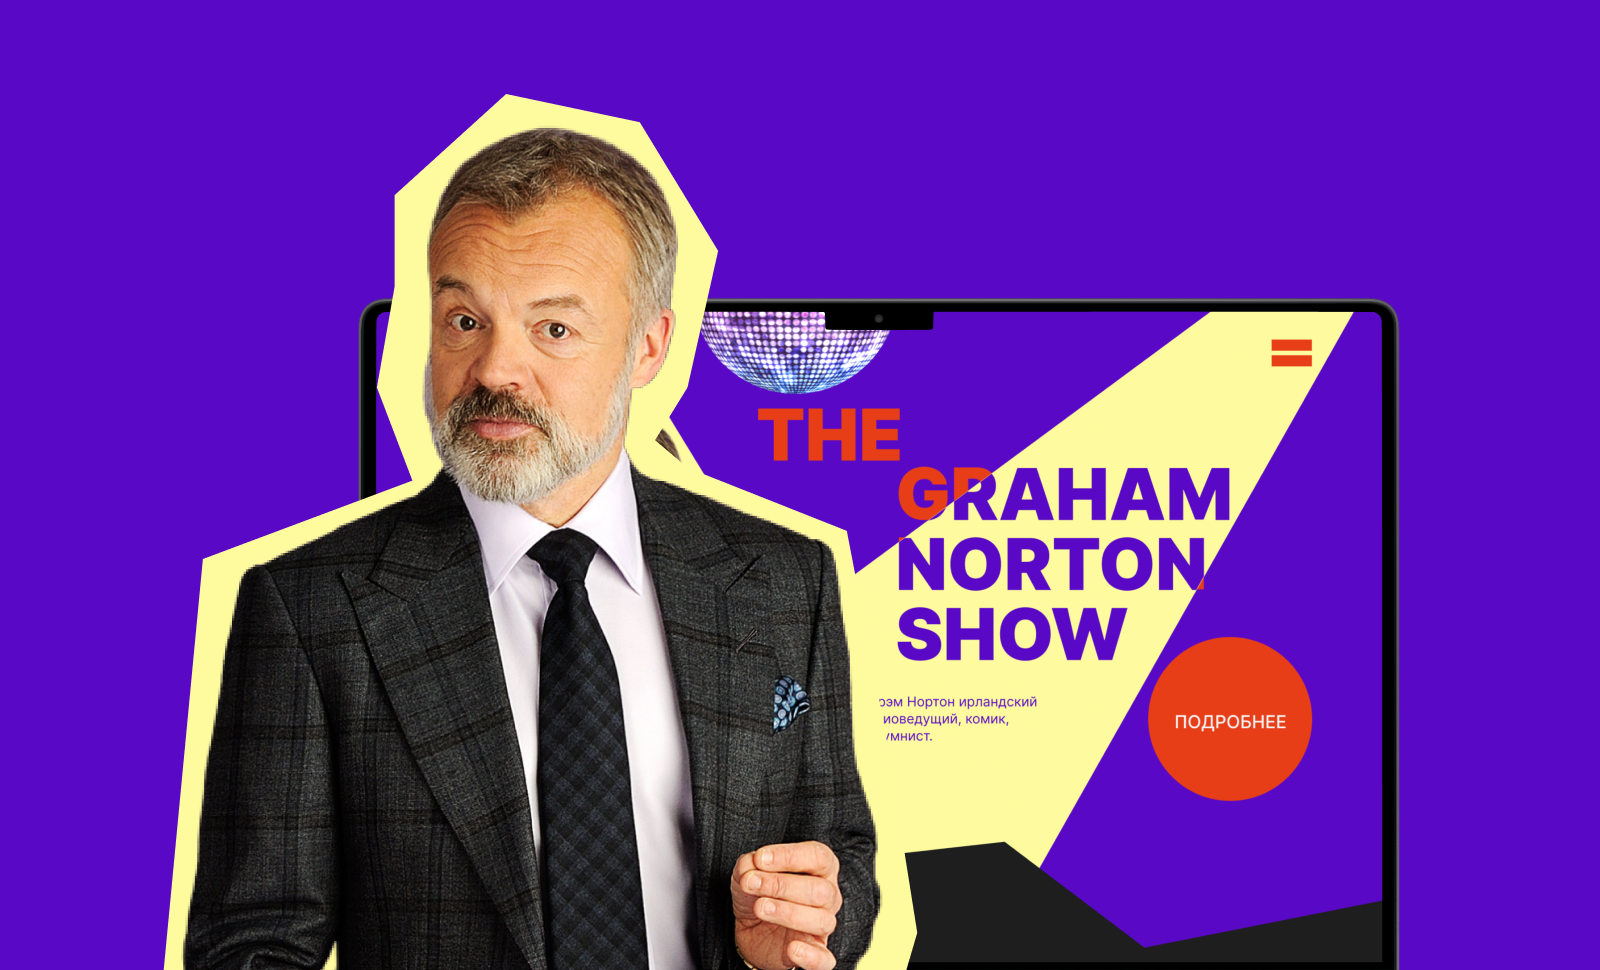 The Graham Norton show promo